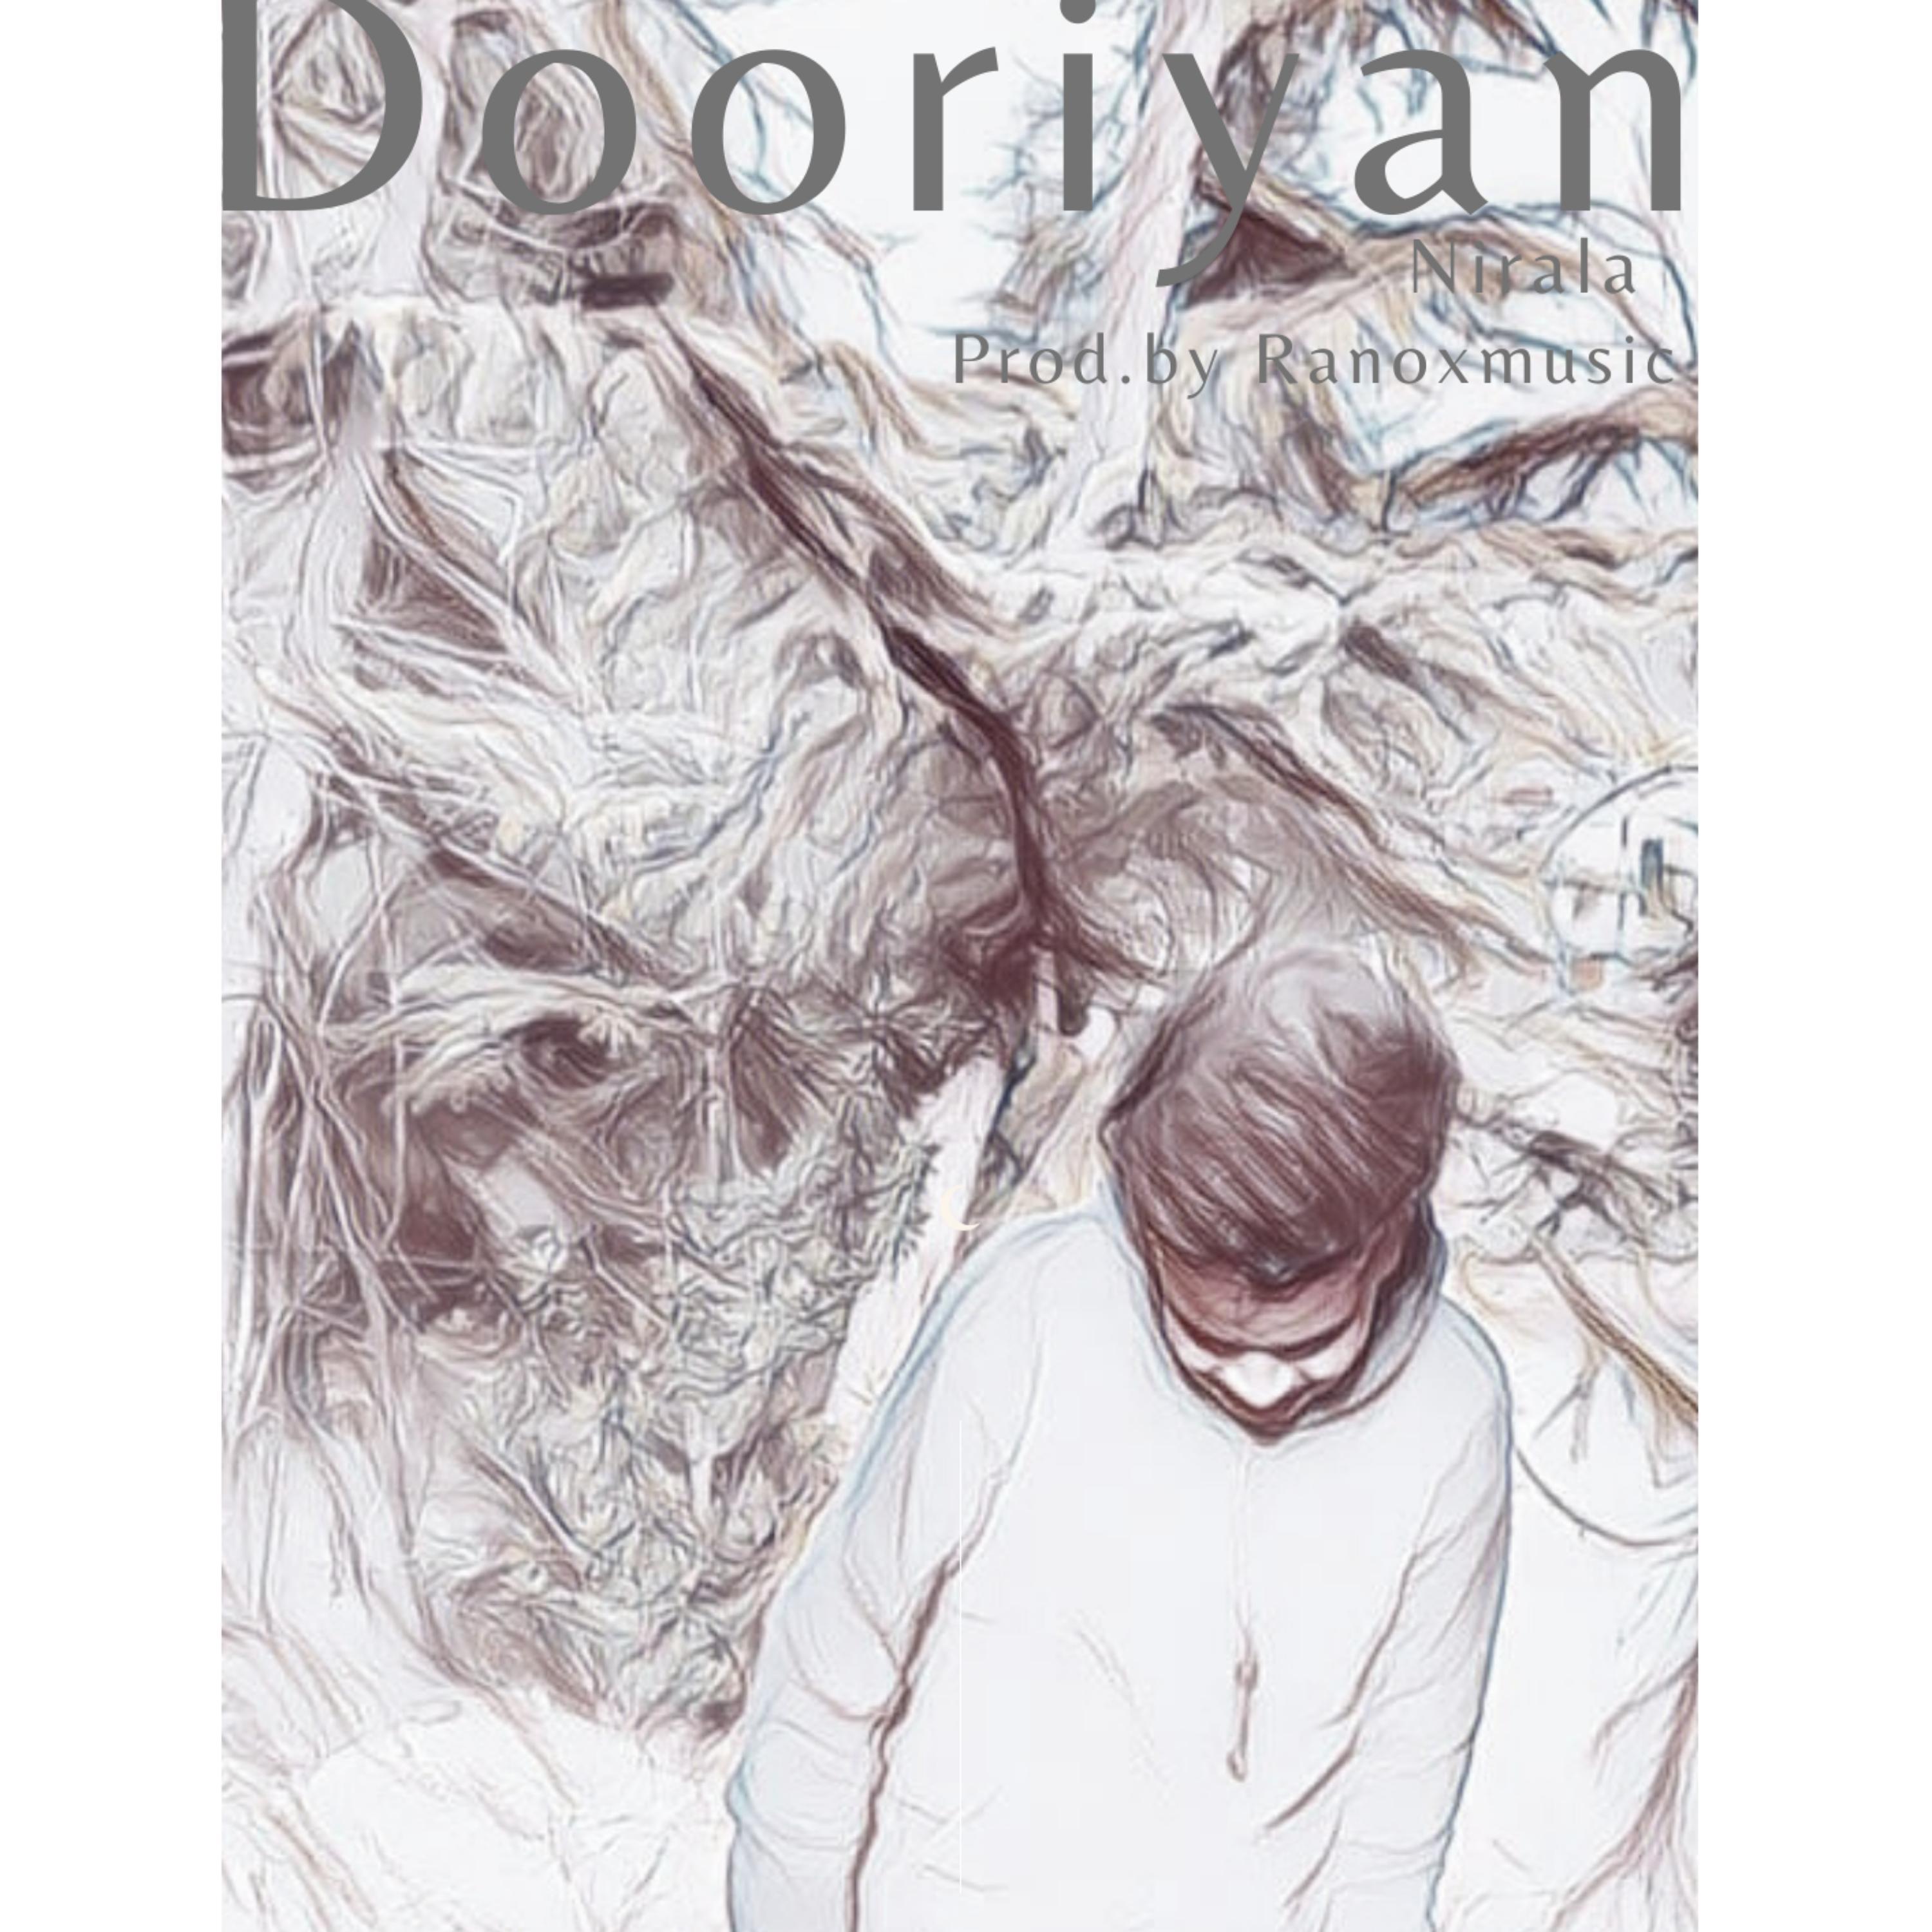 Постер альбома Dooriyan